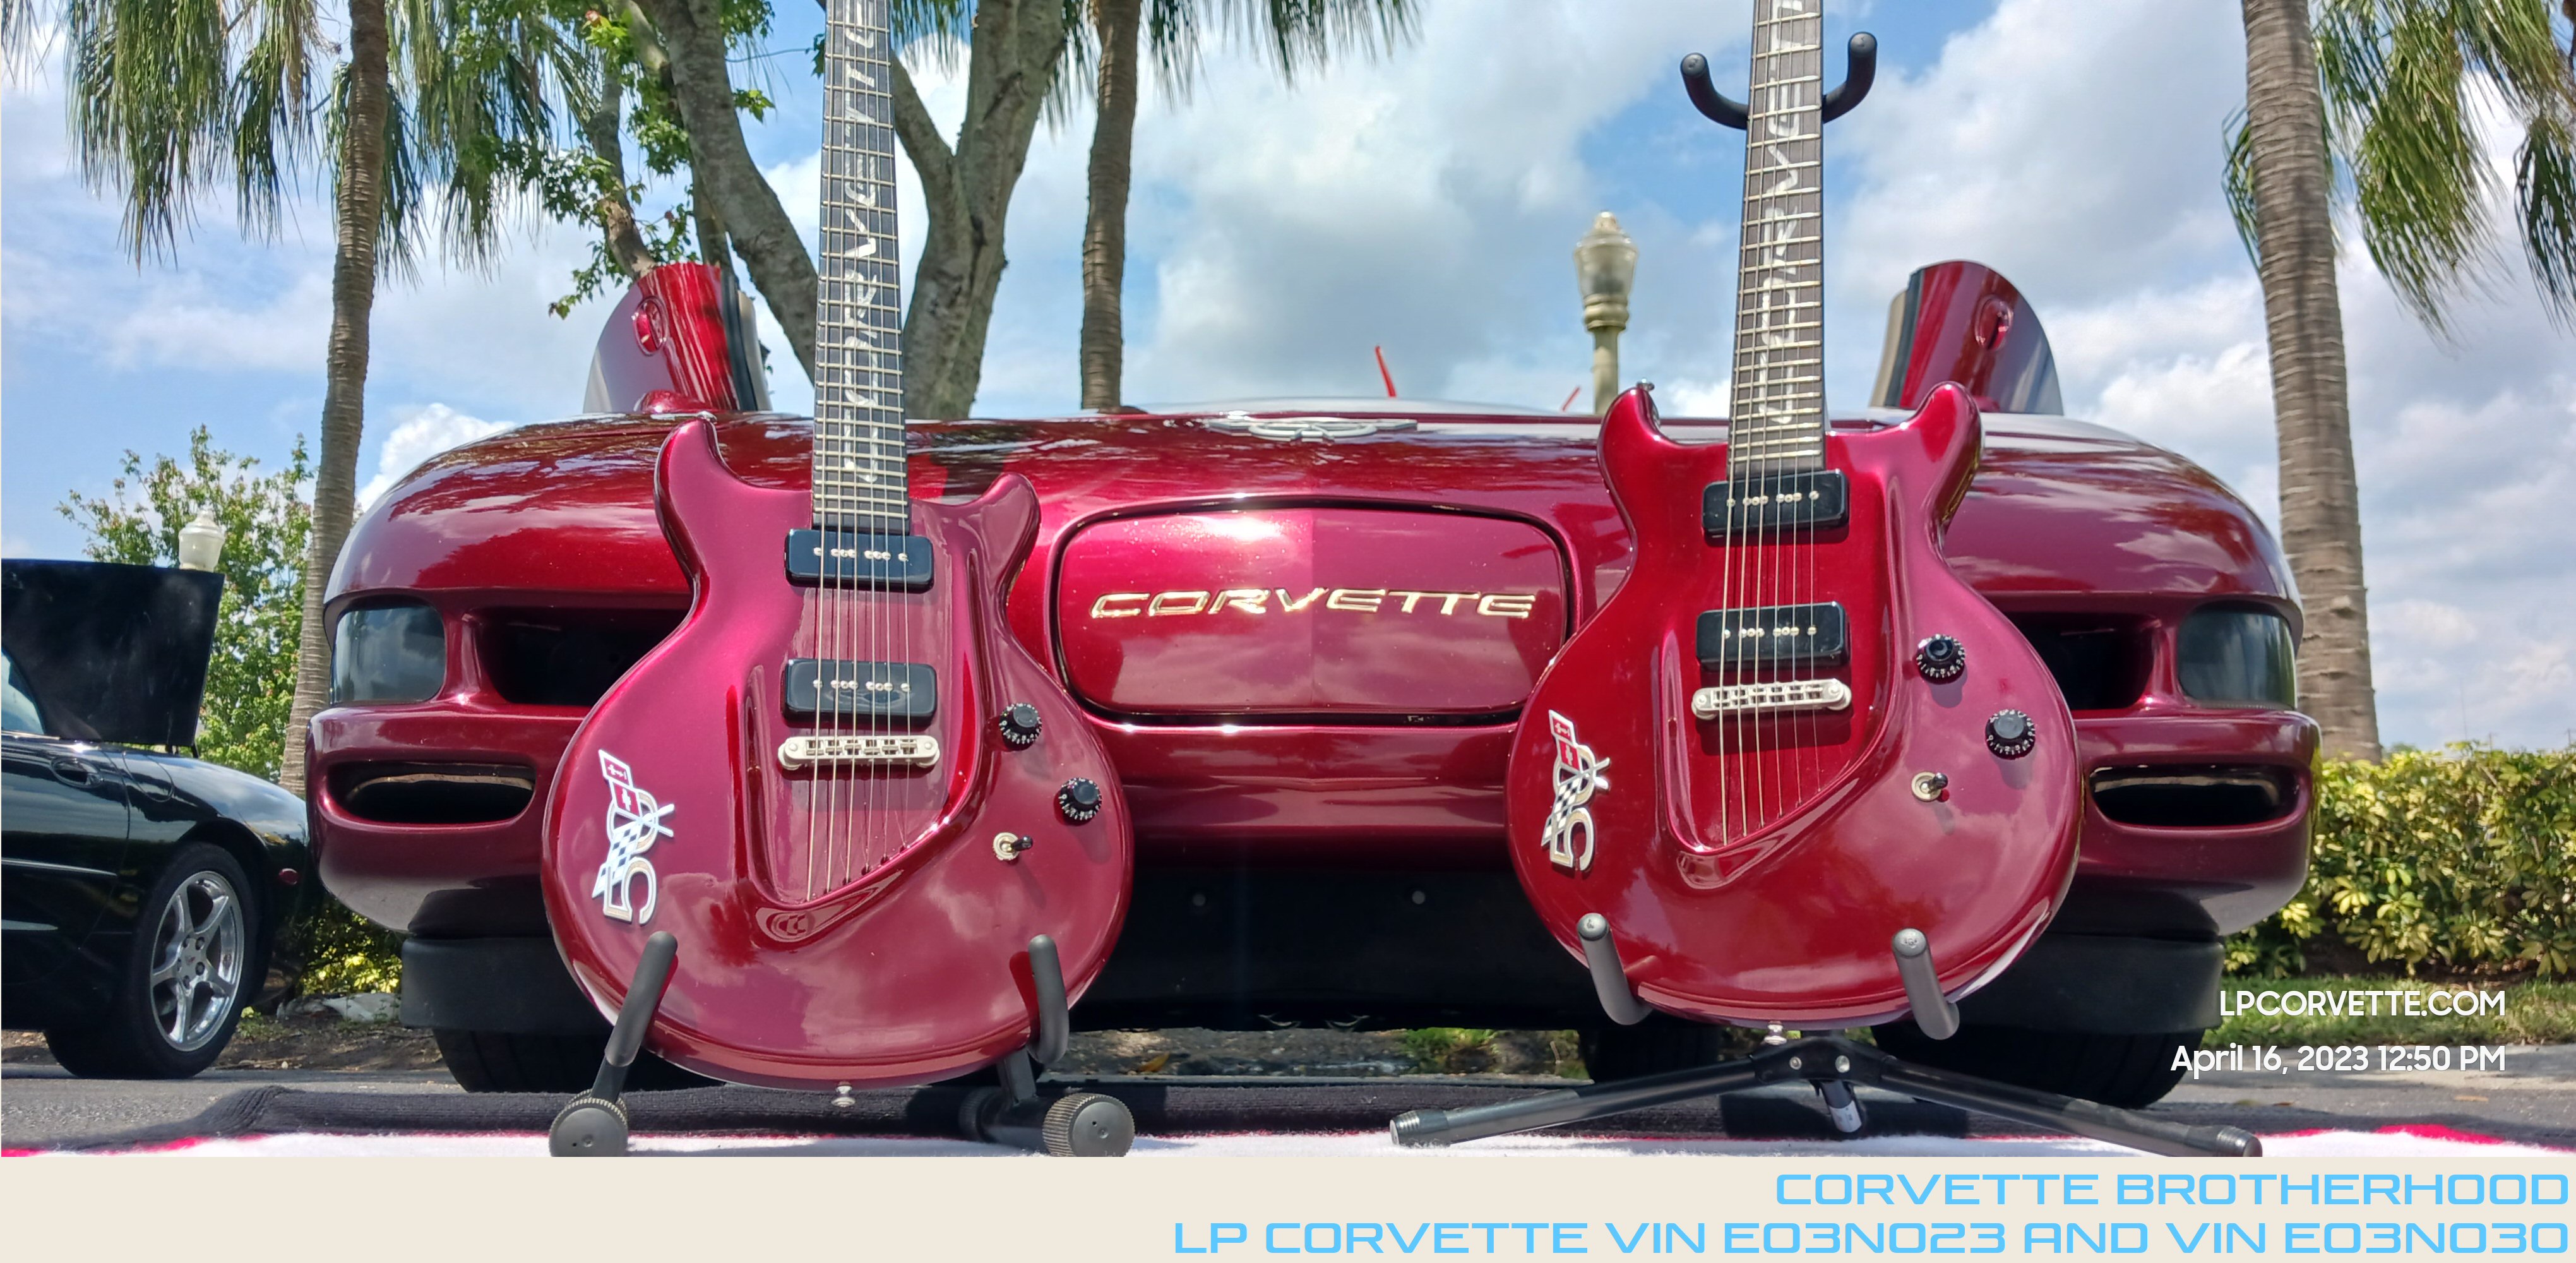 lp-corvette-vin-e03n023-and-vin-e03n030-